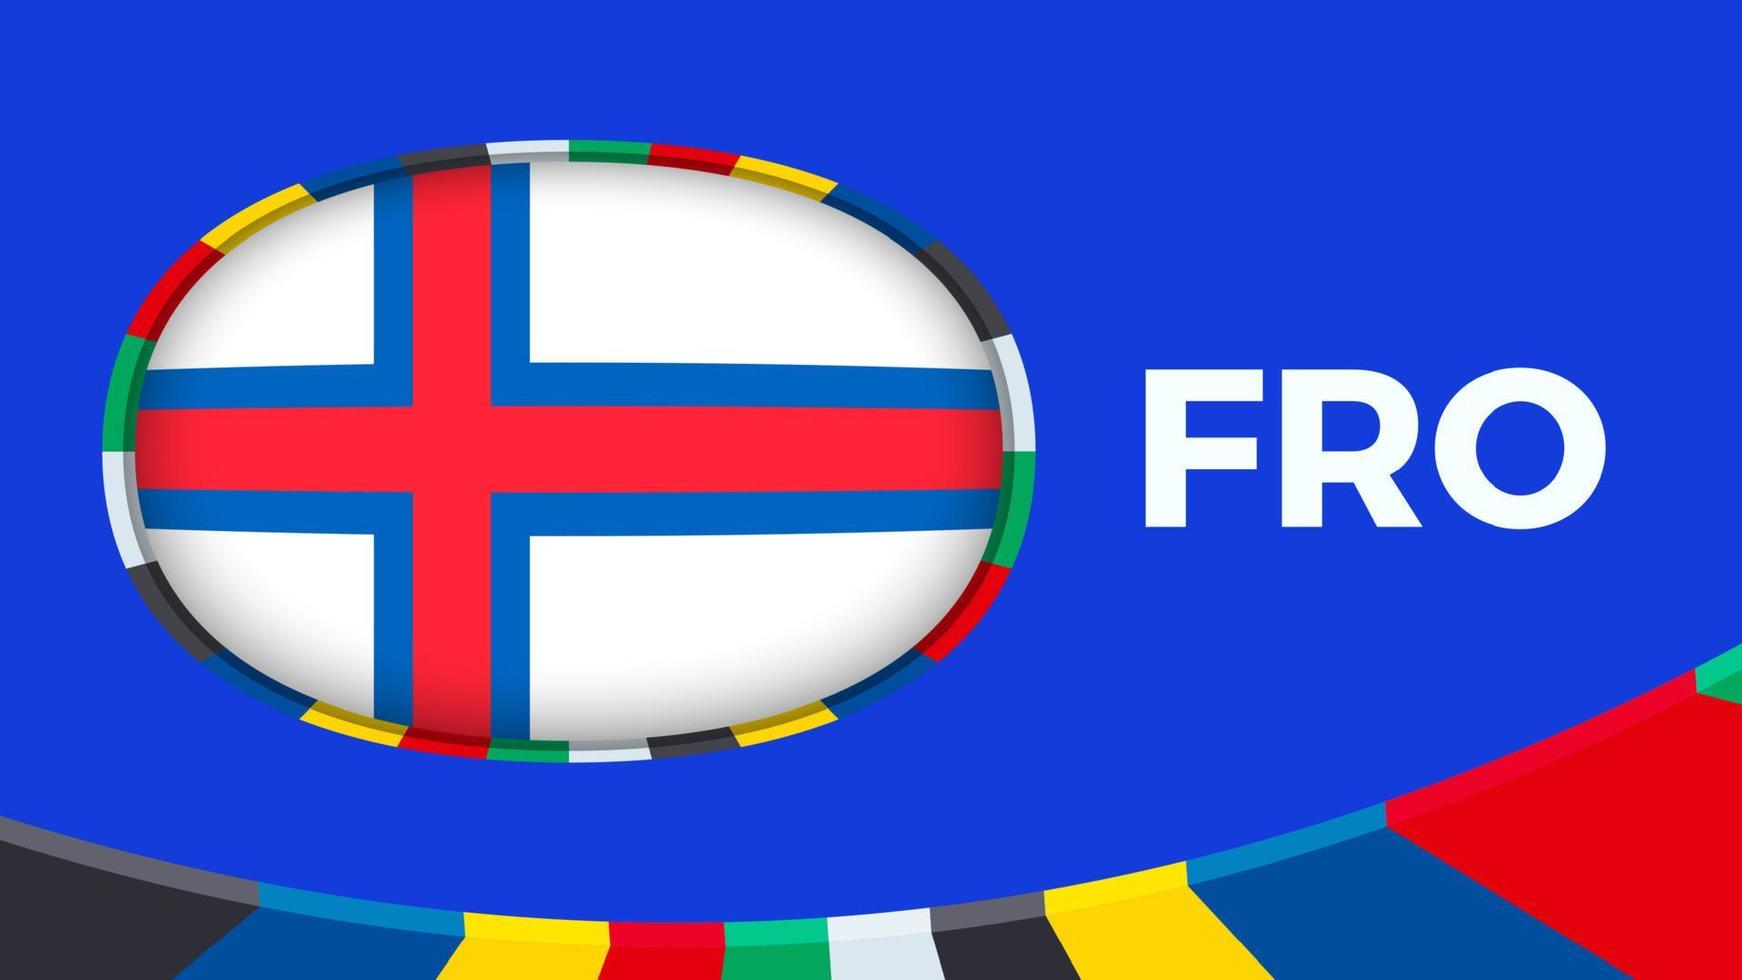 Faroe Islands flag stylized for European football tournament qualification. vector